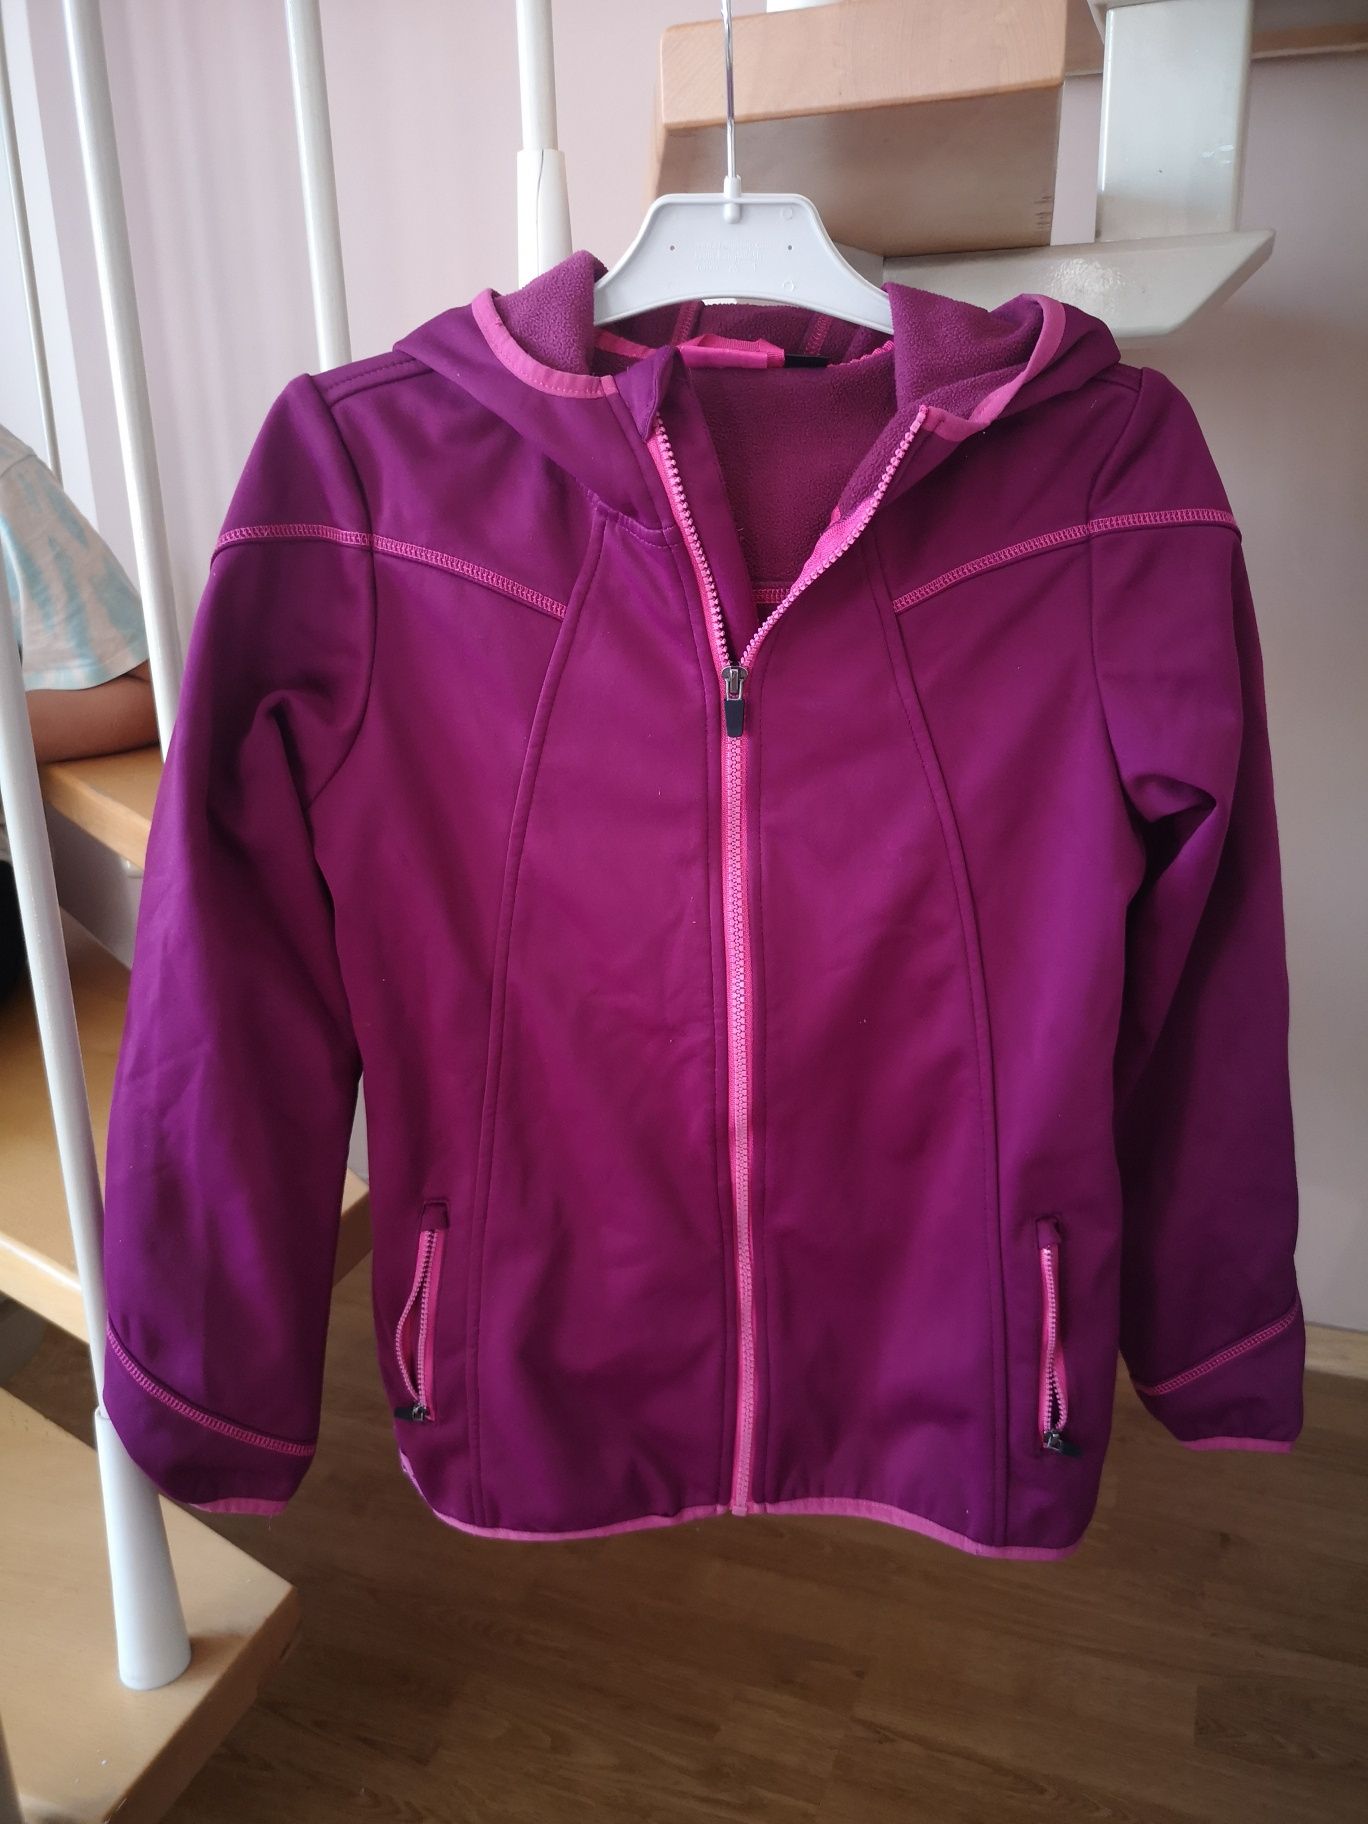 Bluza fiolet fuksja różowa kurtka softshell kaptur h 146 152 sportowa